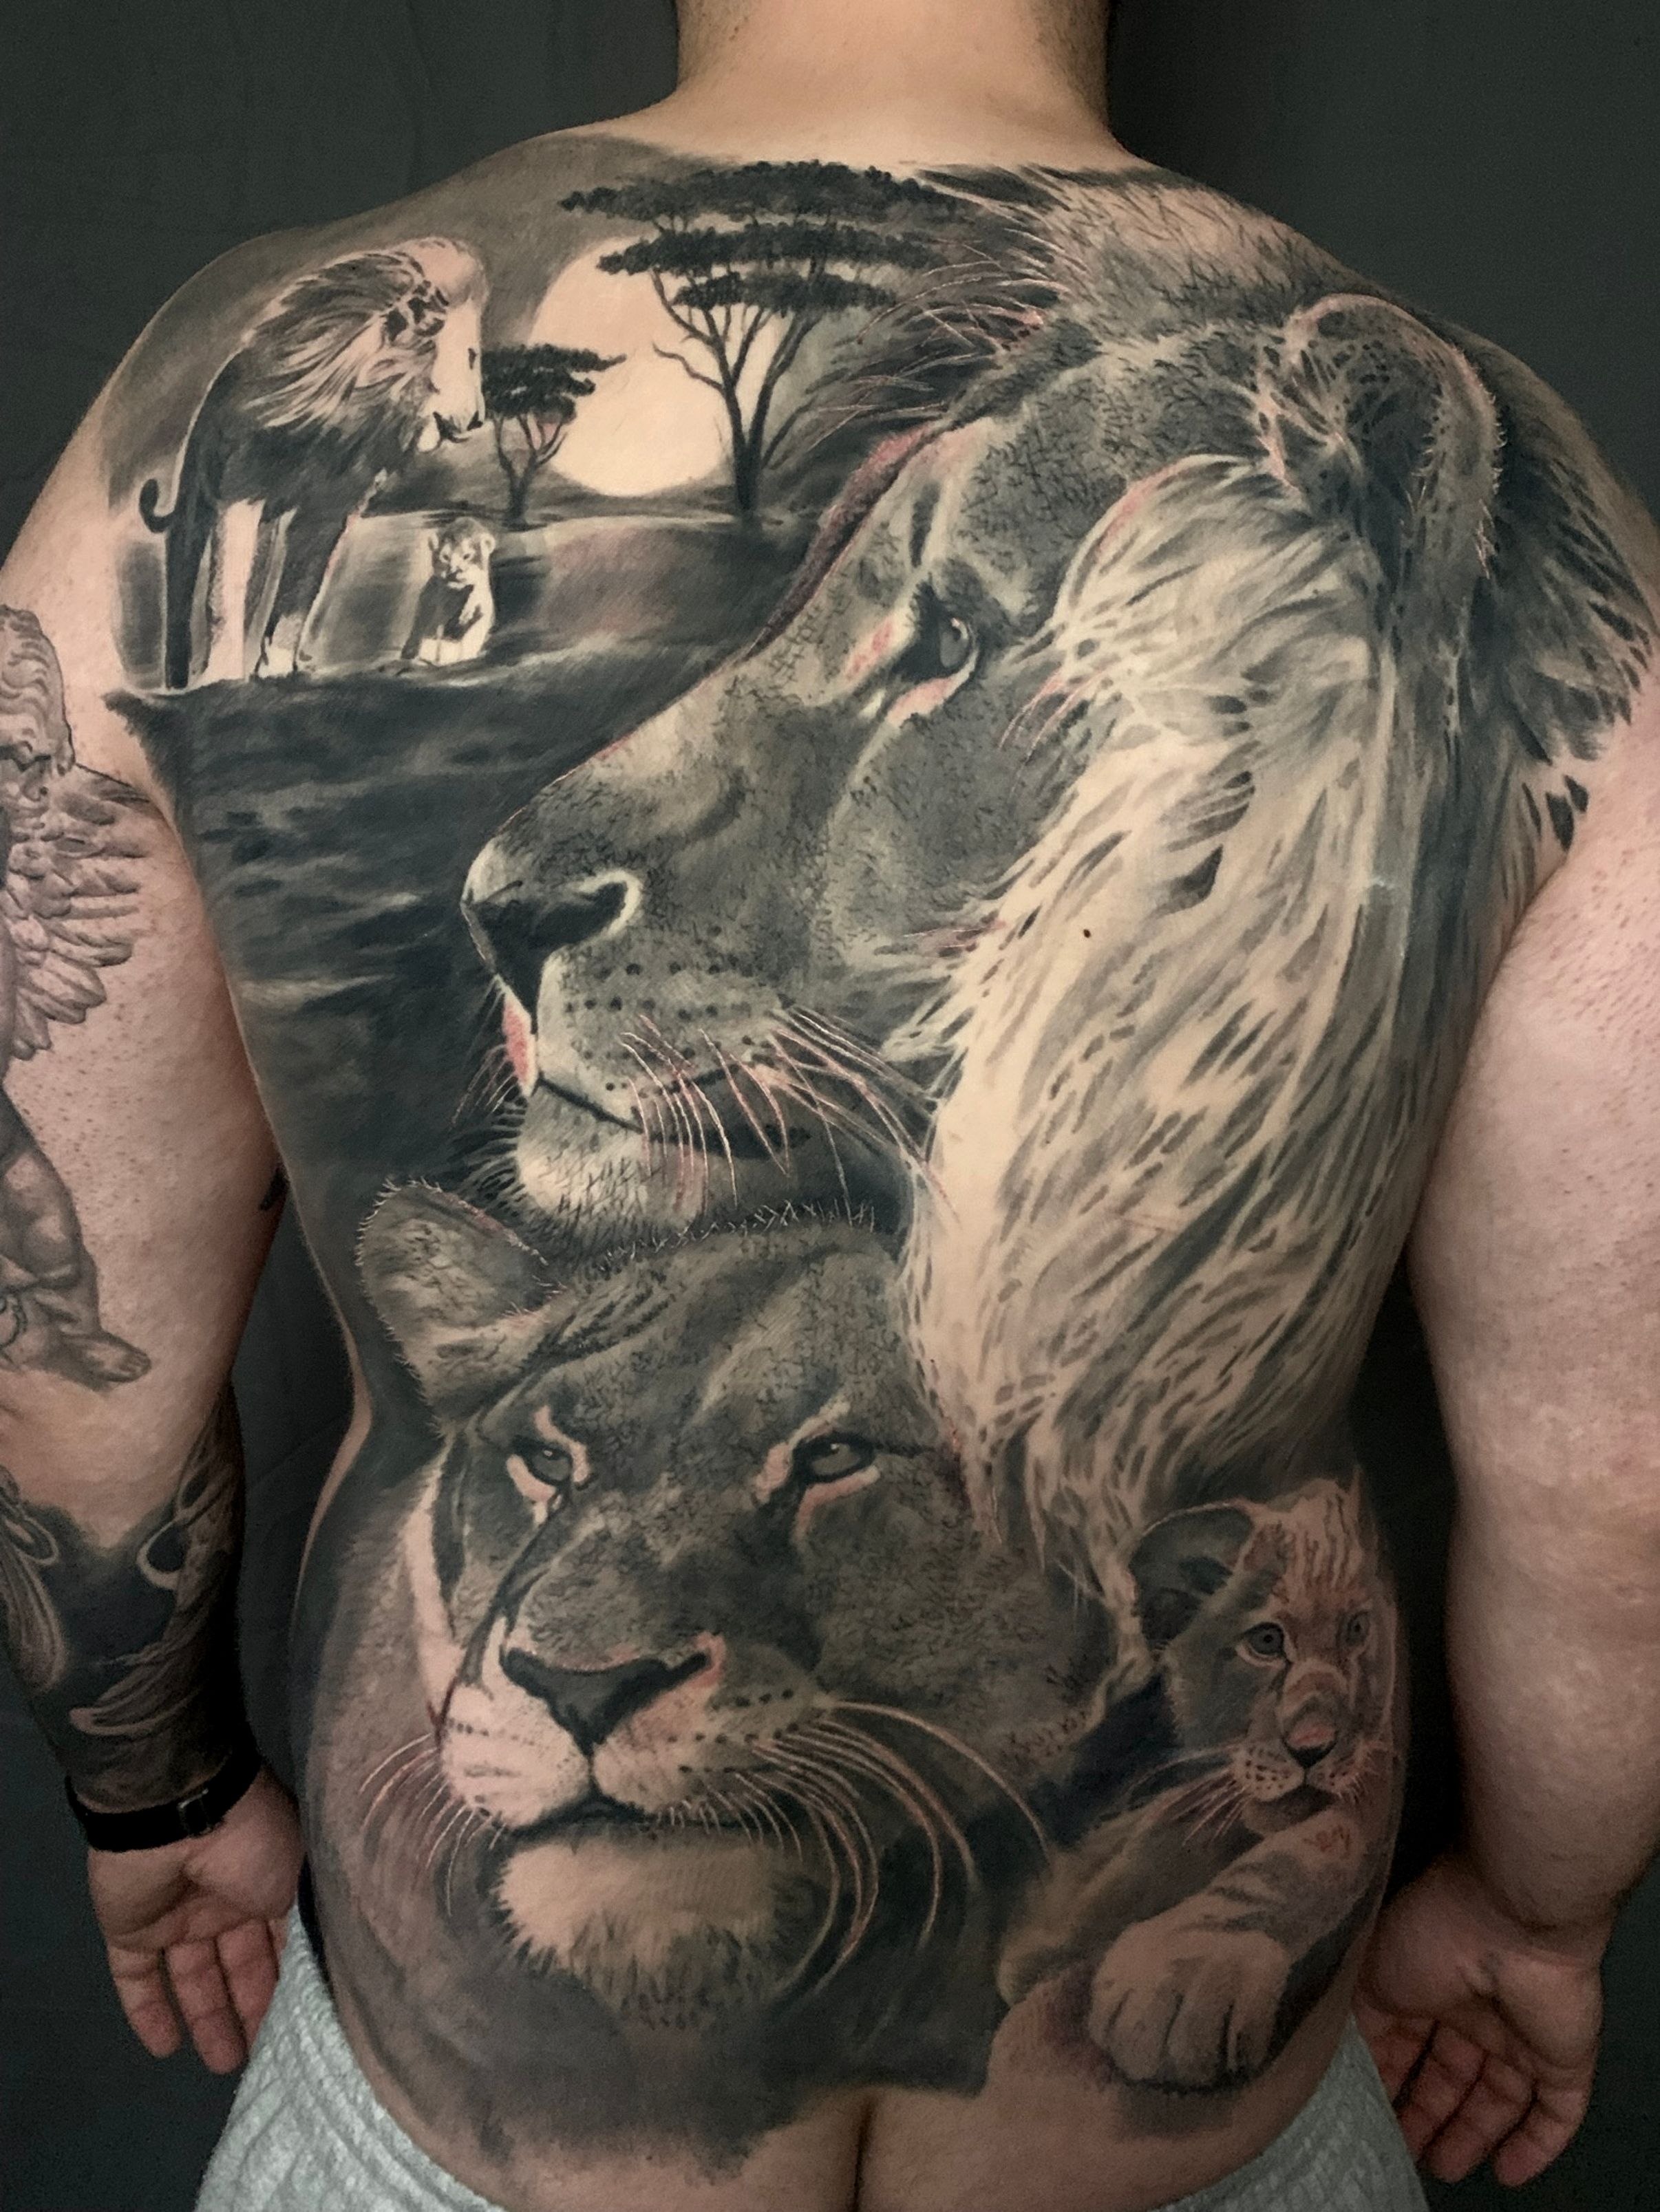 Realistic Black and Grey Lion Pride Tattoo  Evolution Ink Studio   Fayetteville NC  Artist Markos  Mens lion tattoo Lion tattoo Animal  tattoos